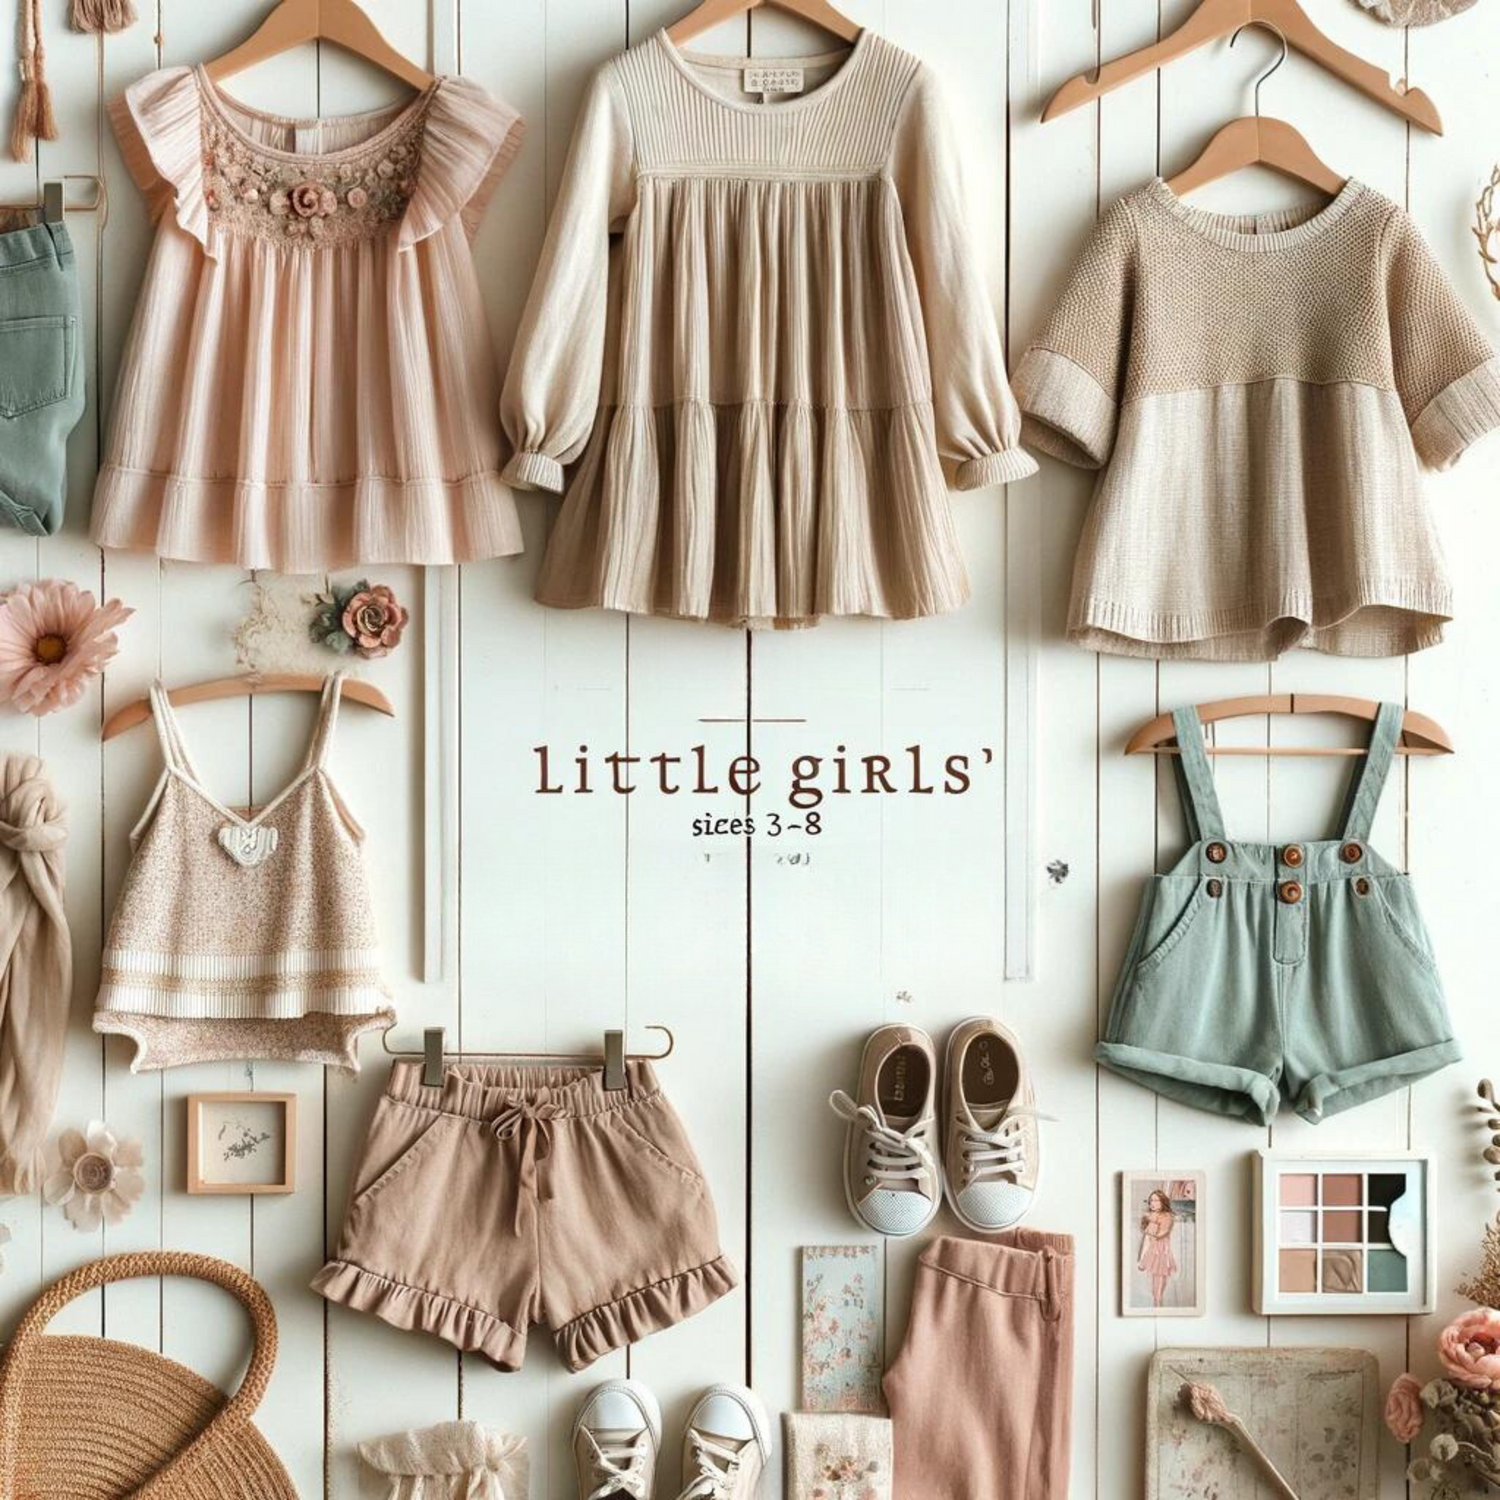 Little Girls (sizes 3-8)